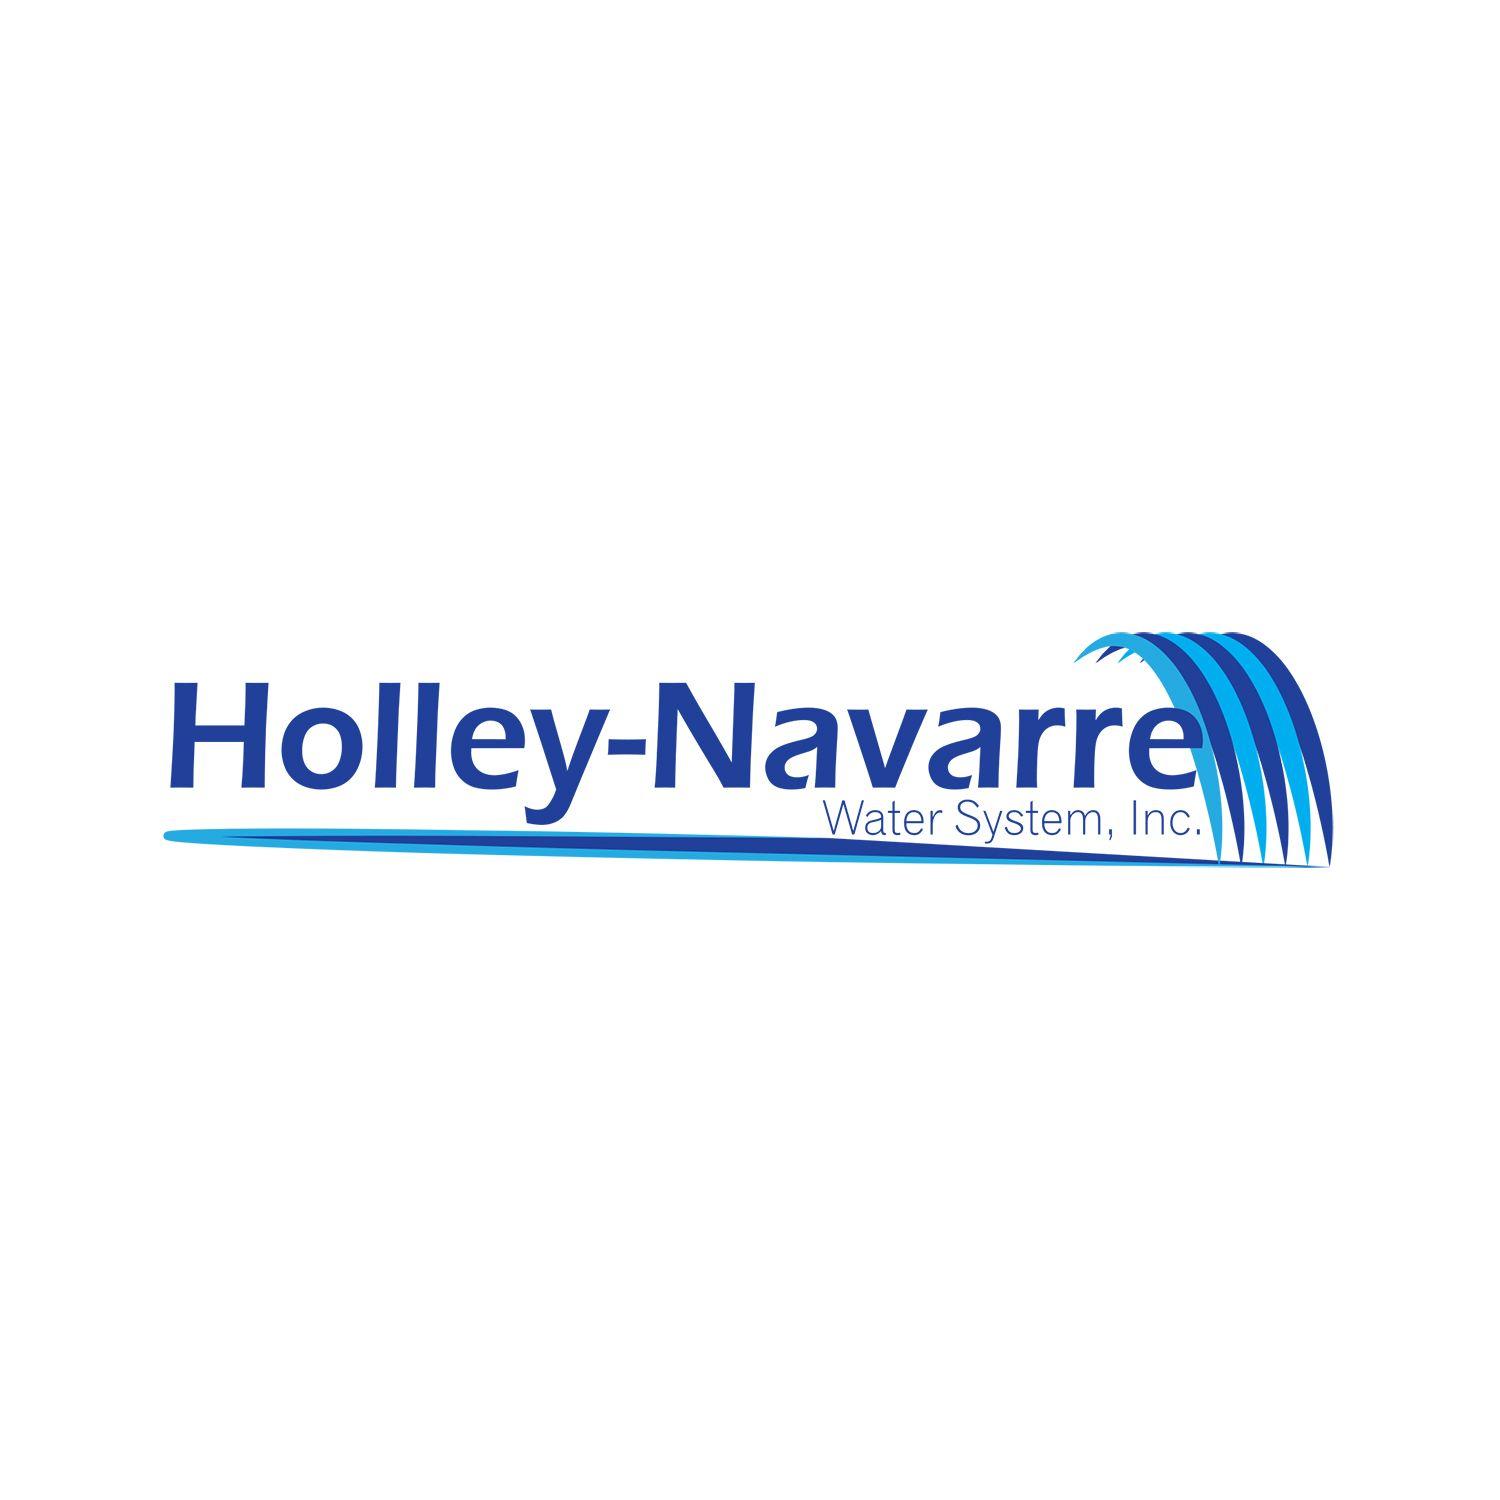 Navarre Logo - Modern, Professional, Water Company Logo Design for Holley-Navarre ...